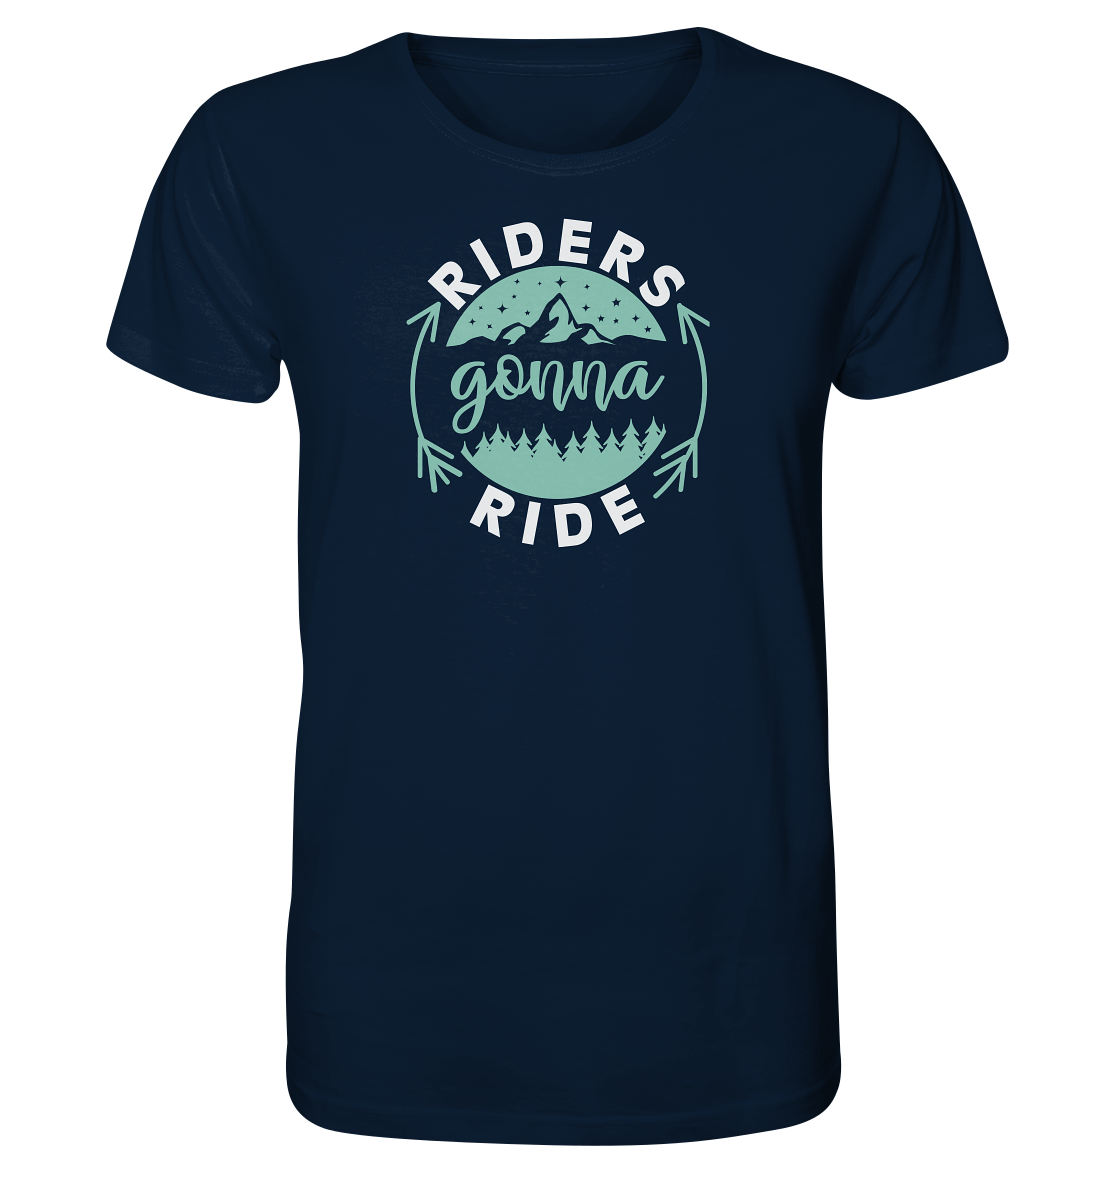 Riders gonna Ride - Organic Shirt